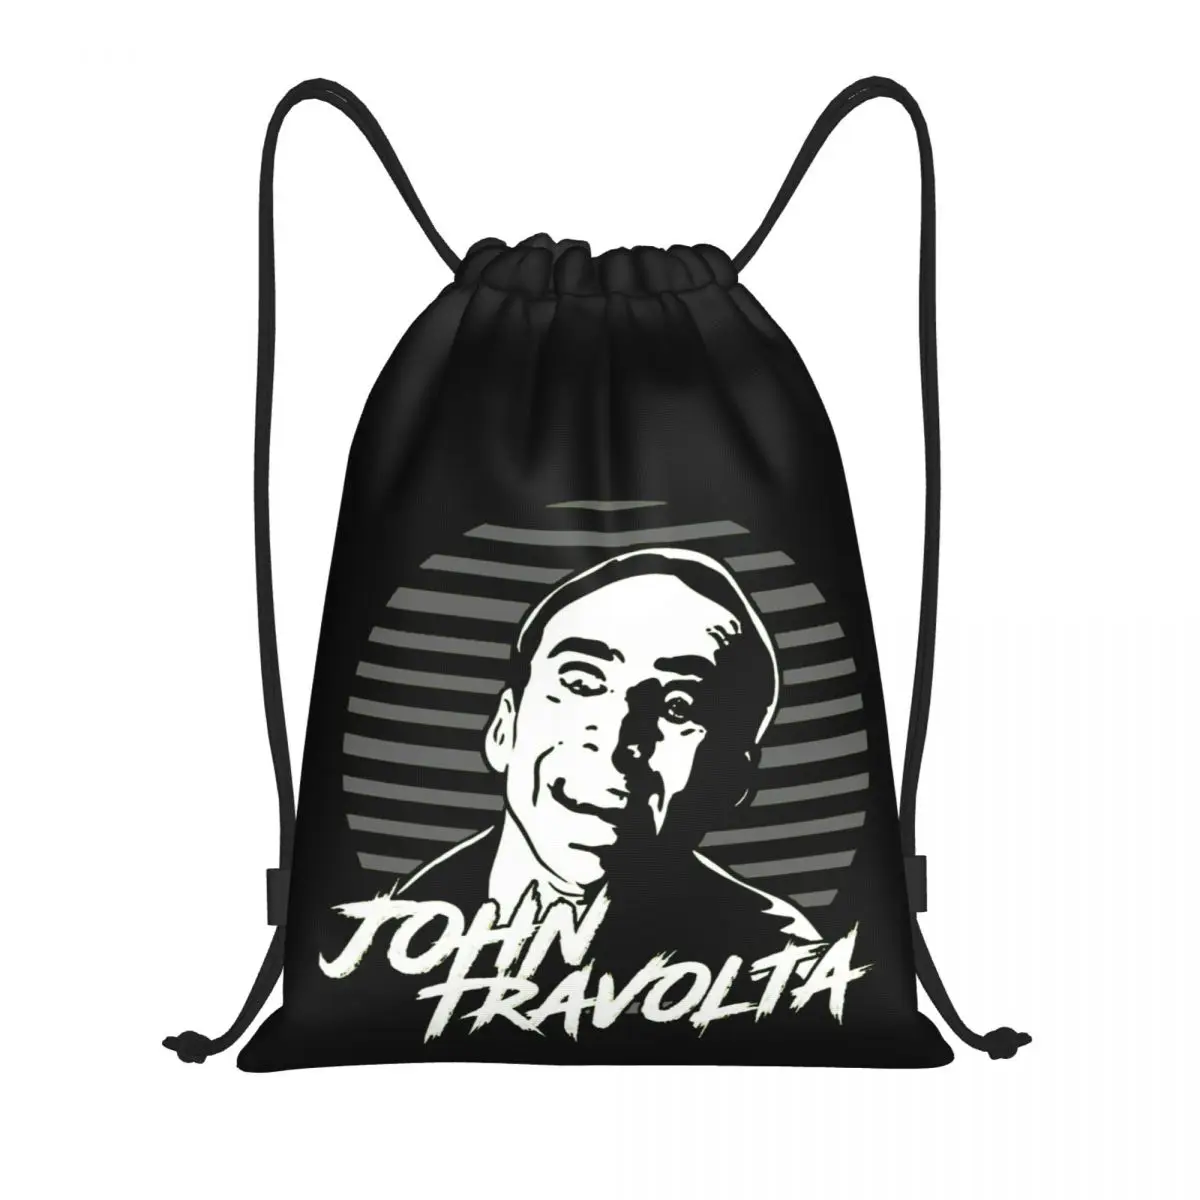 

Nicolas Cage John Travolta Face 2 Drawstring Bags Gym Bag Knapsack Firm Graphic Vintage Backpack Funny Novelty